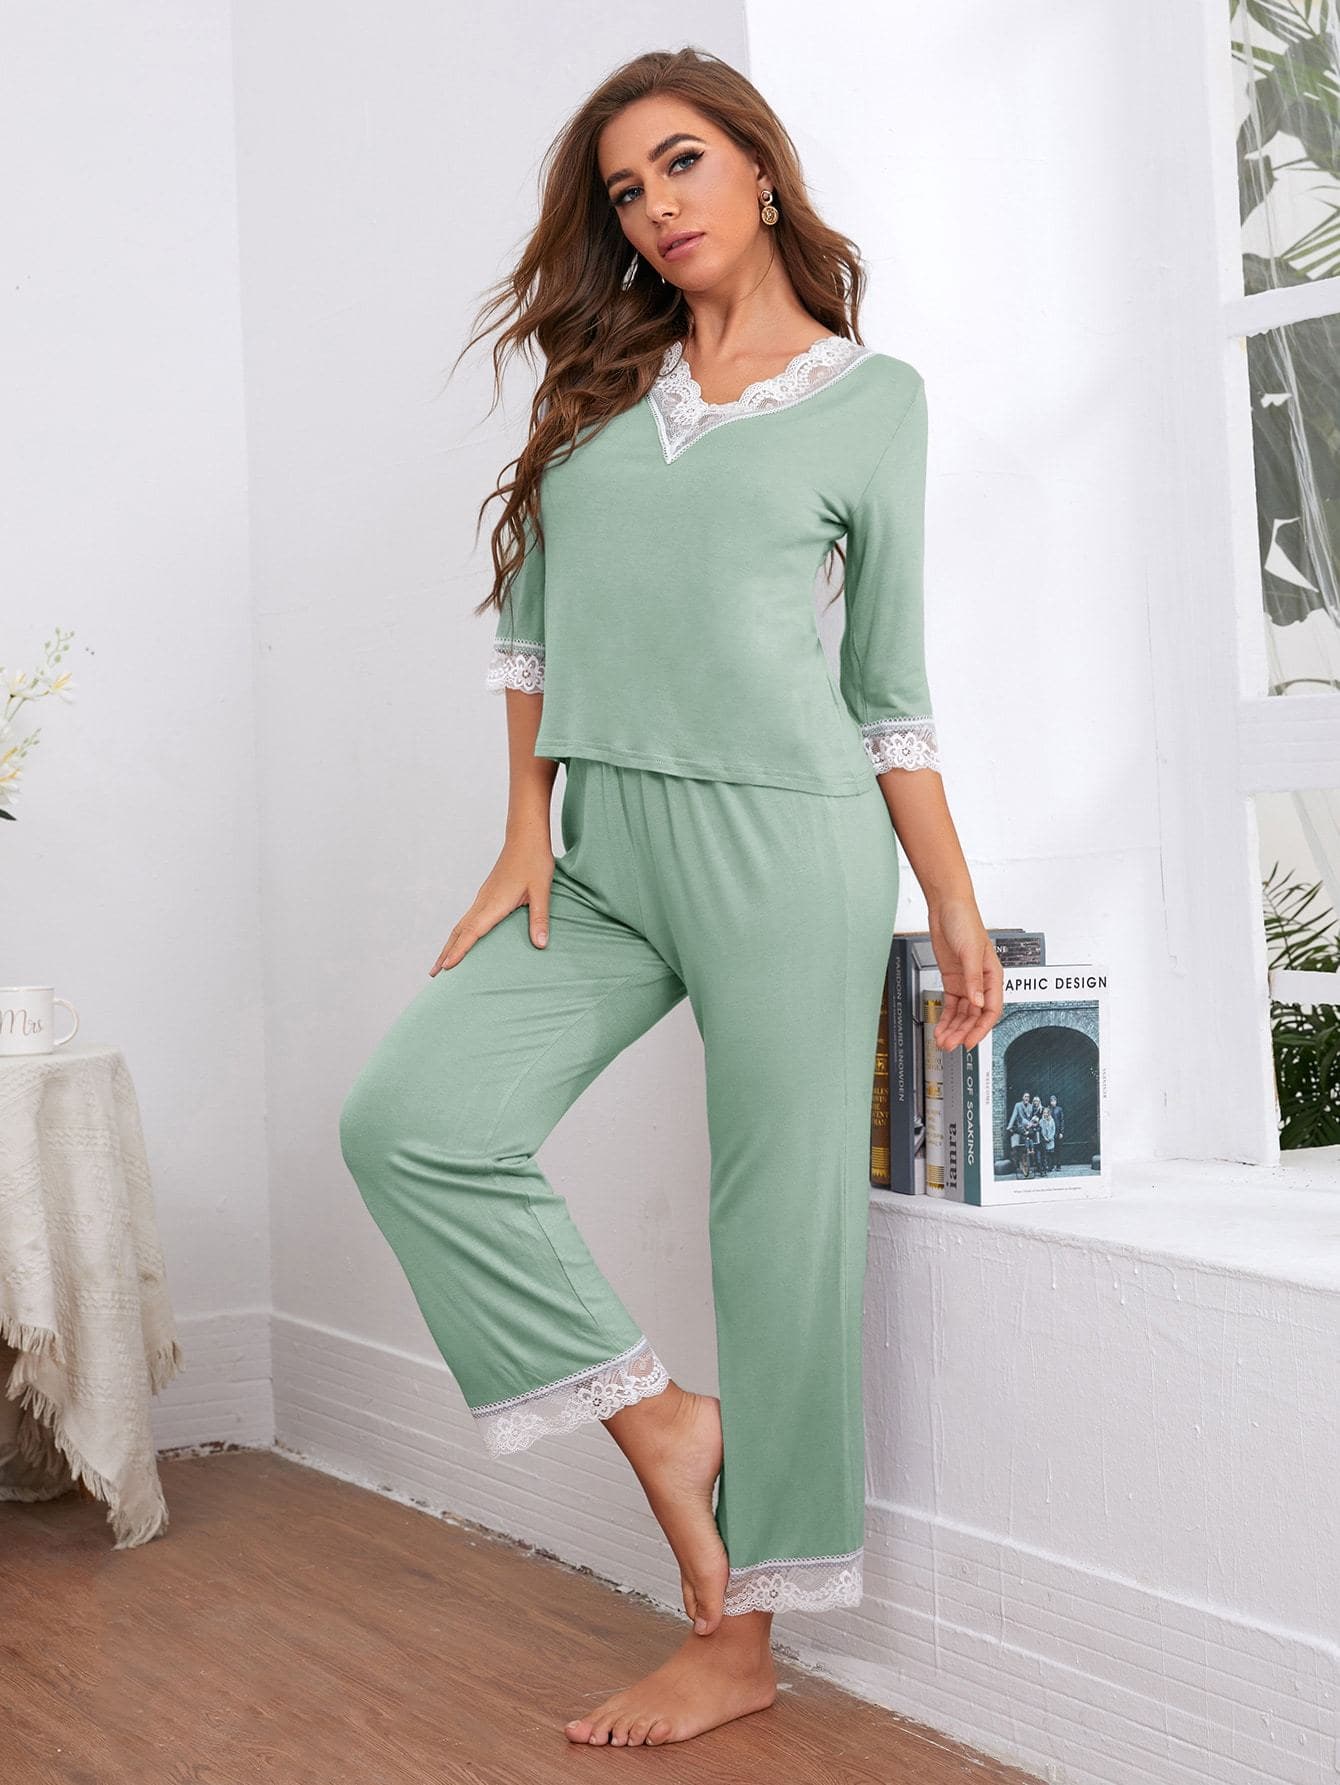 V-Neck Contrast Lace Scallop Trim Top and Pants Pyjama Sleepwear Set